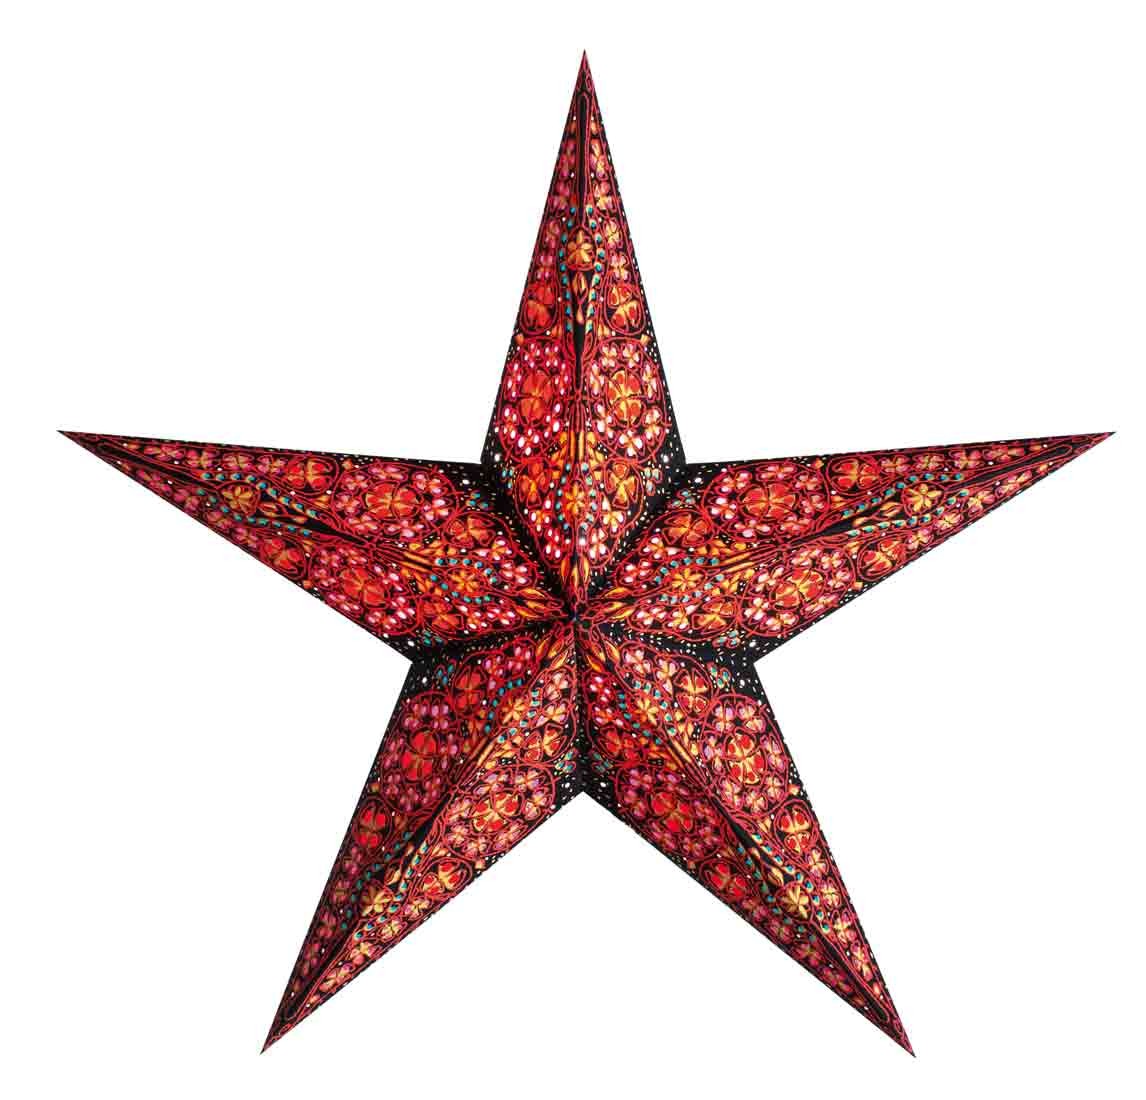 Papierstern starlightz kalea red size M